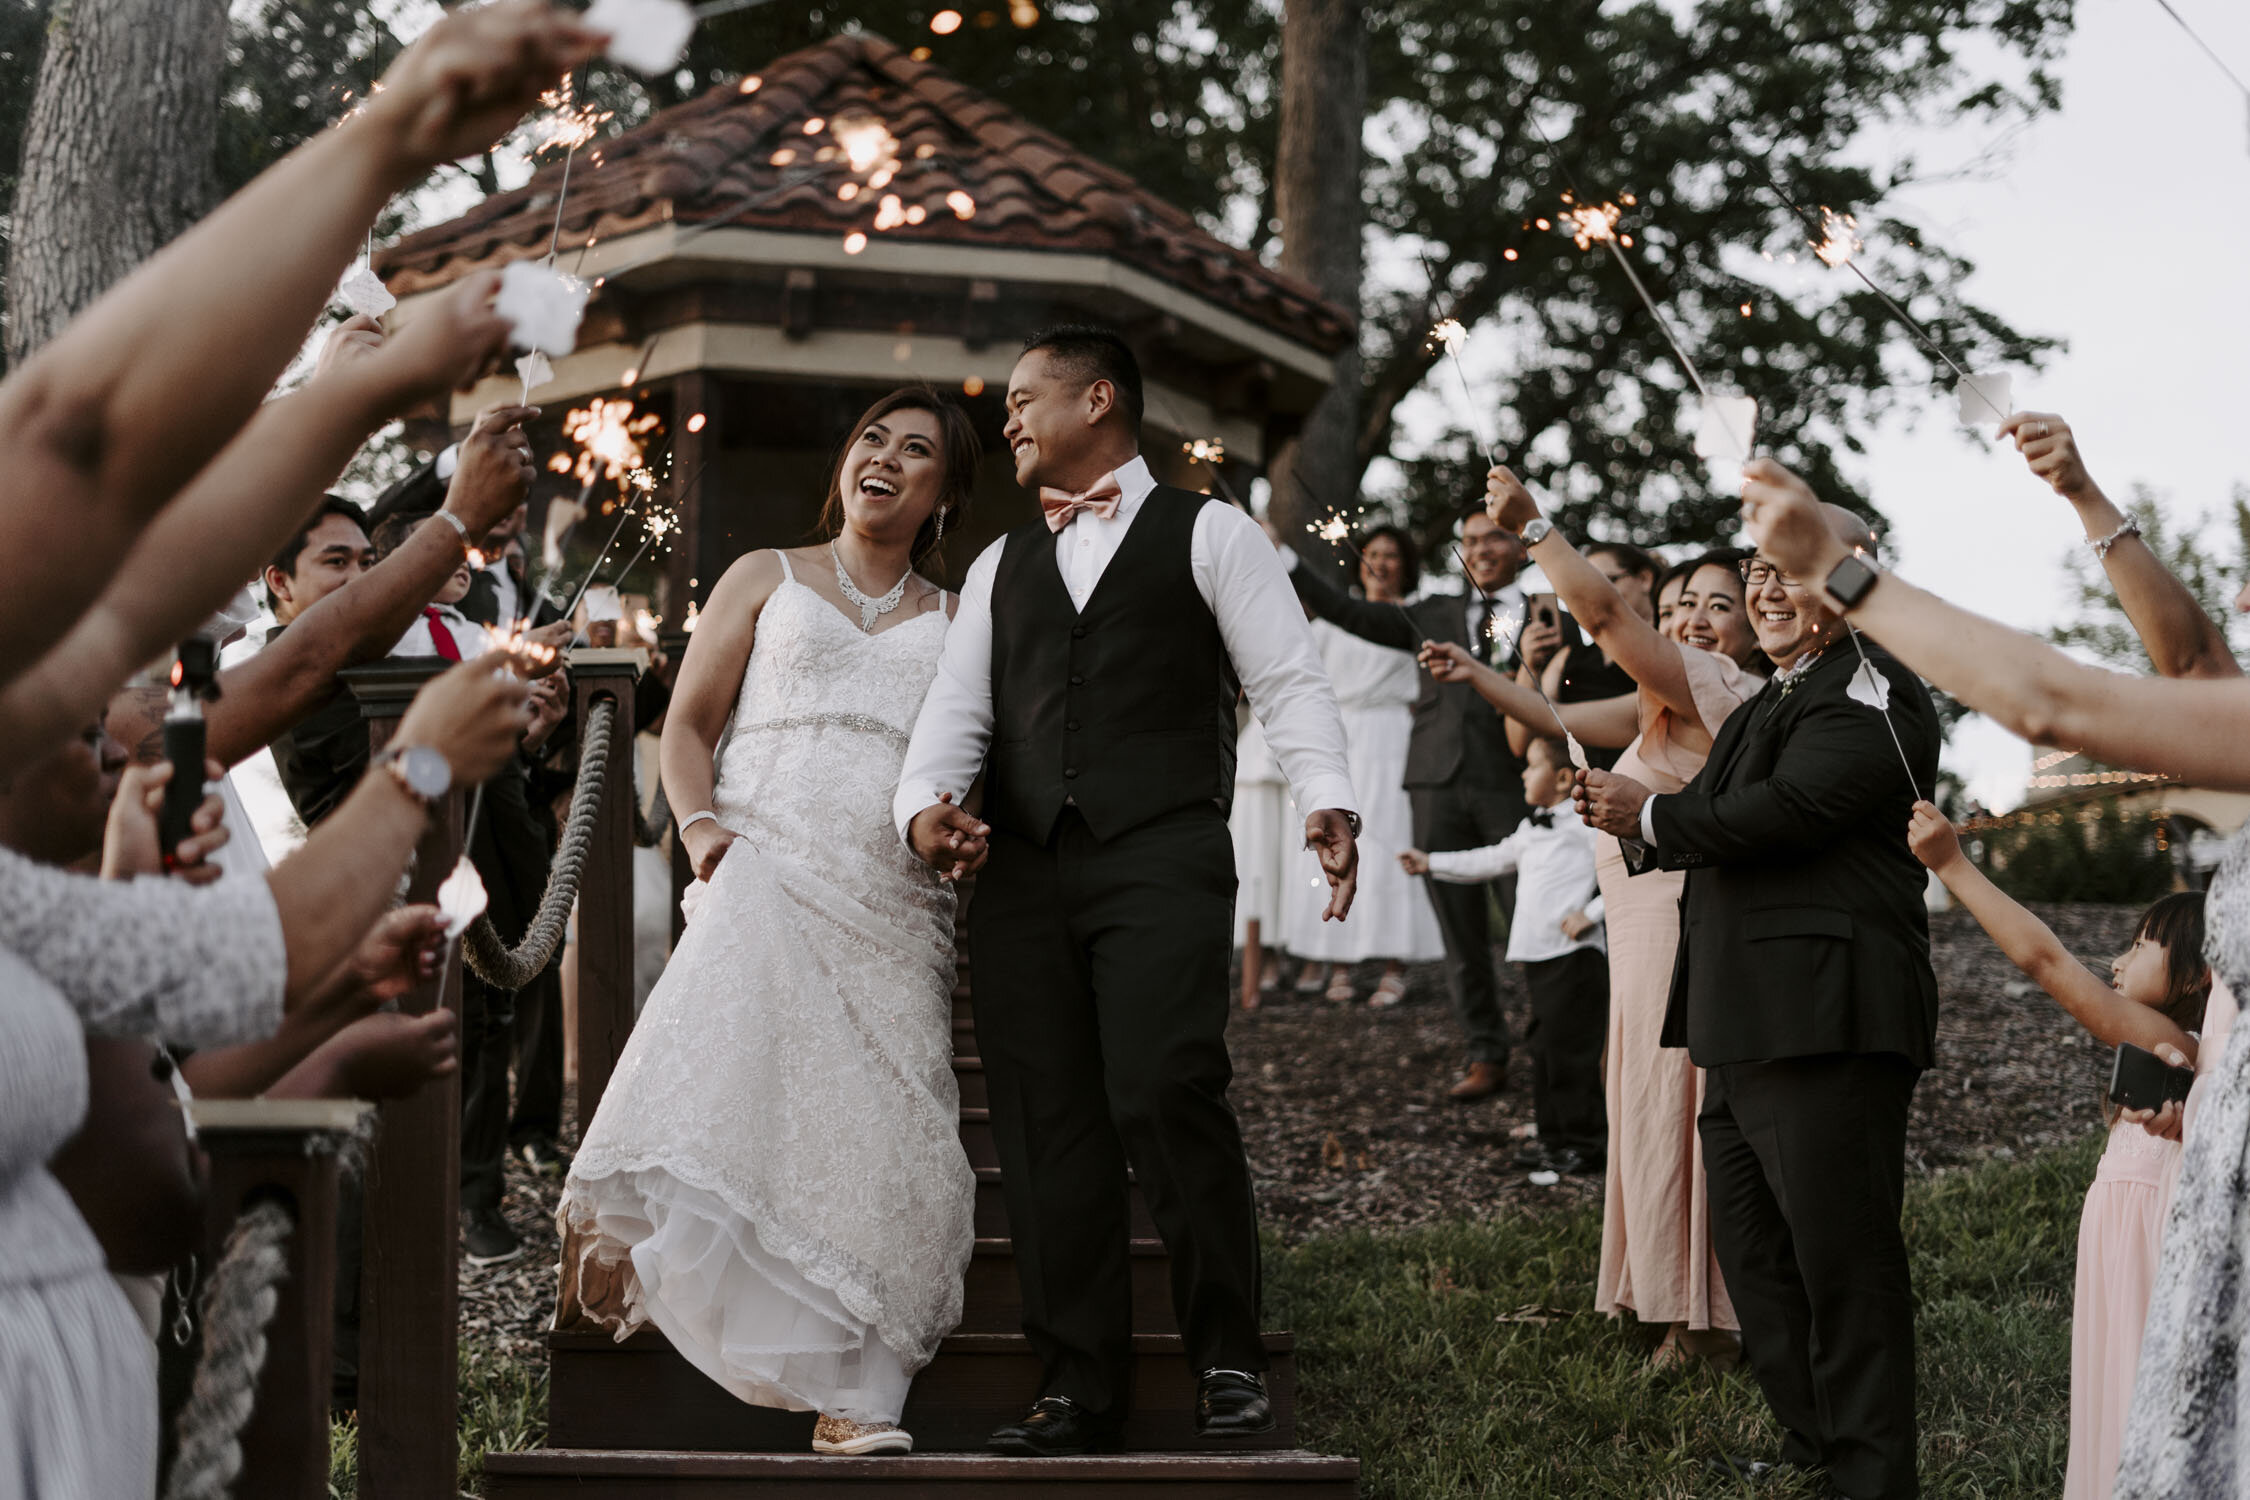 Greensboro Winston-Salem, NC Wedding Photography at Belews Lake | Bella Collina Mansion Sparkler Exit | Kayli LaFon Wedding Photographer